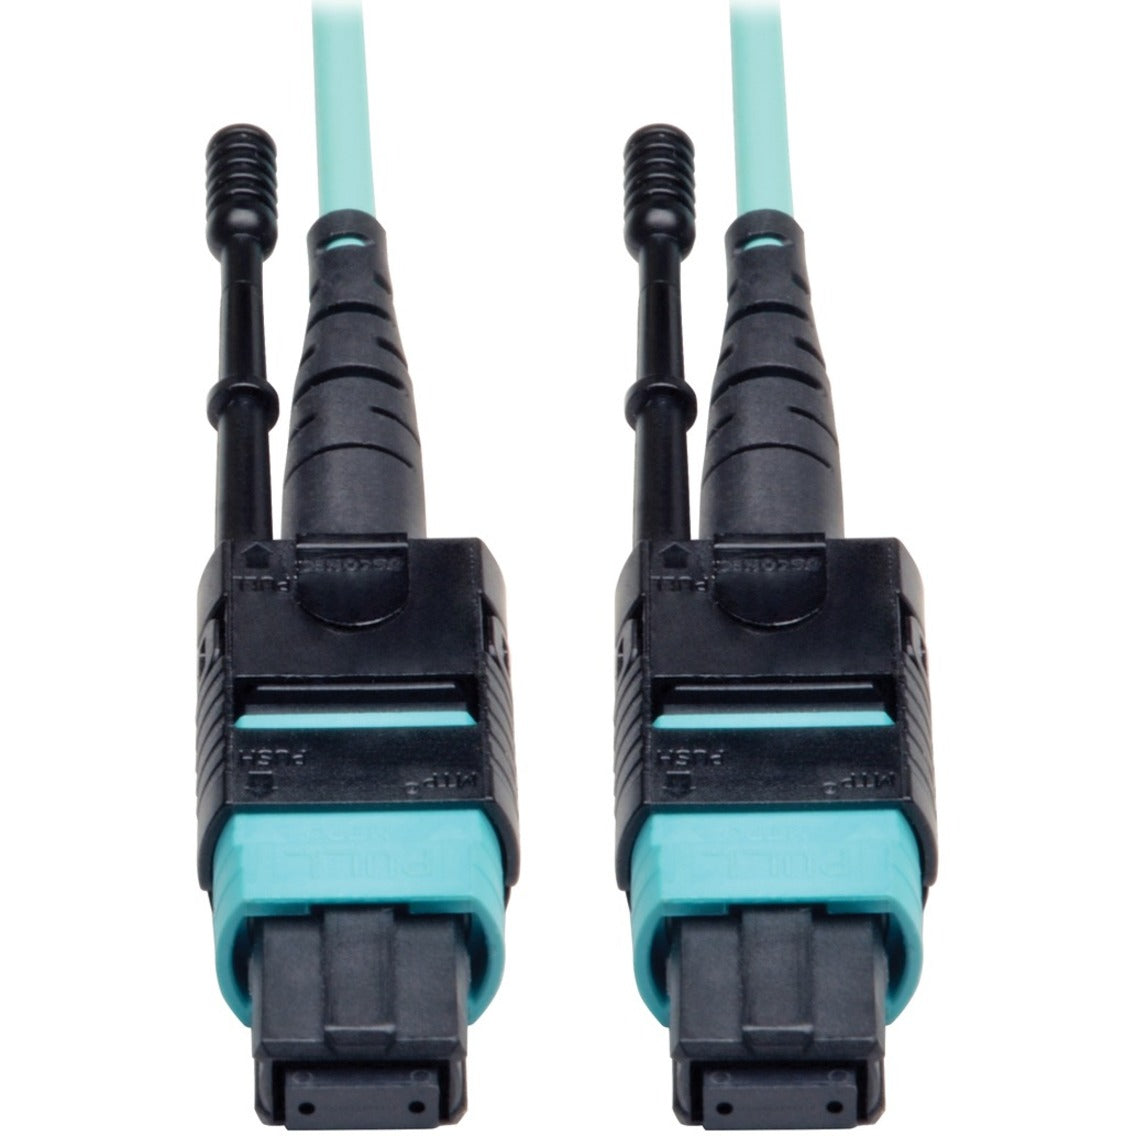 Marca: Tripp Lite Cable de parche MTP / MPO de 10 metros 12 fibras 40GbE Aqua OM3 Plenum